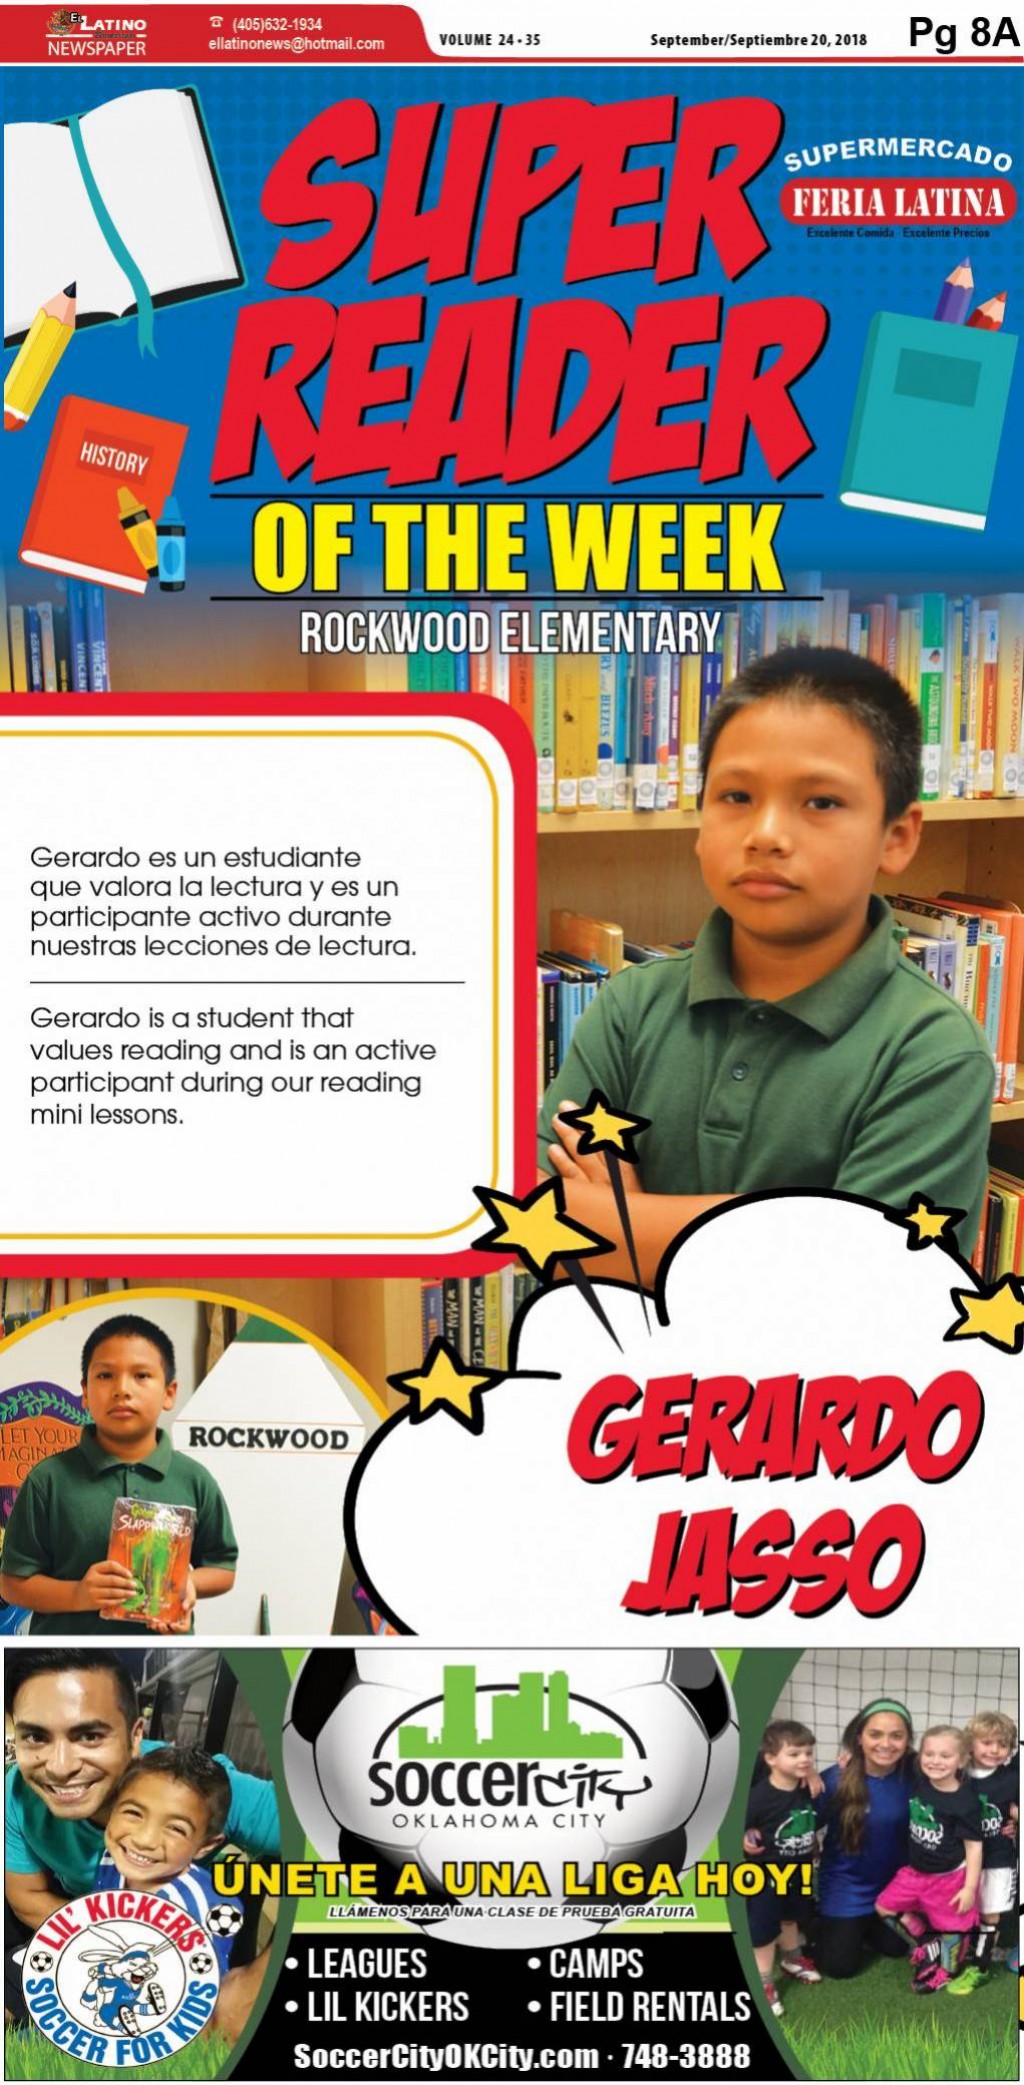 Super Reader of the Week: Gerardo Jasso